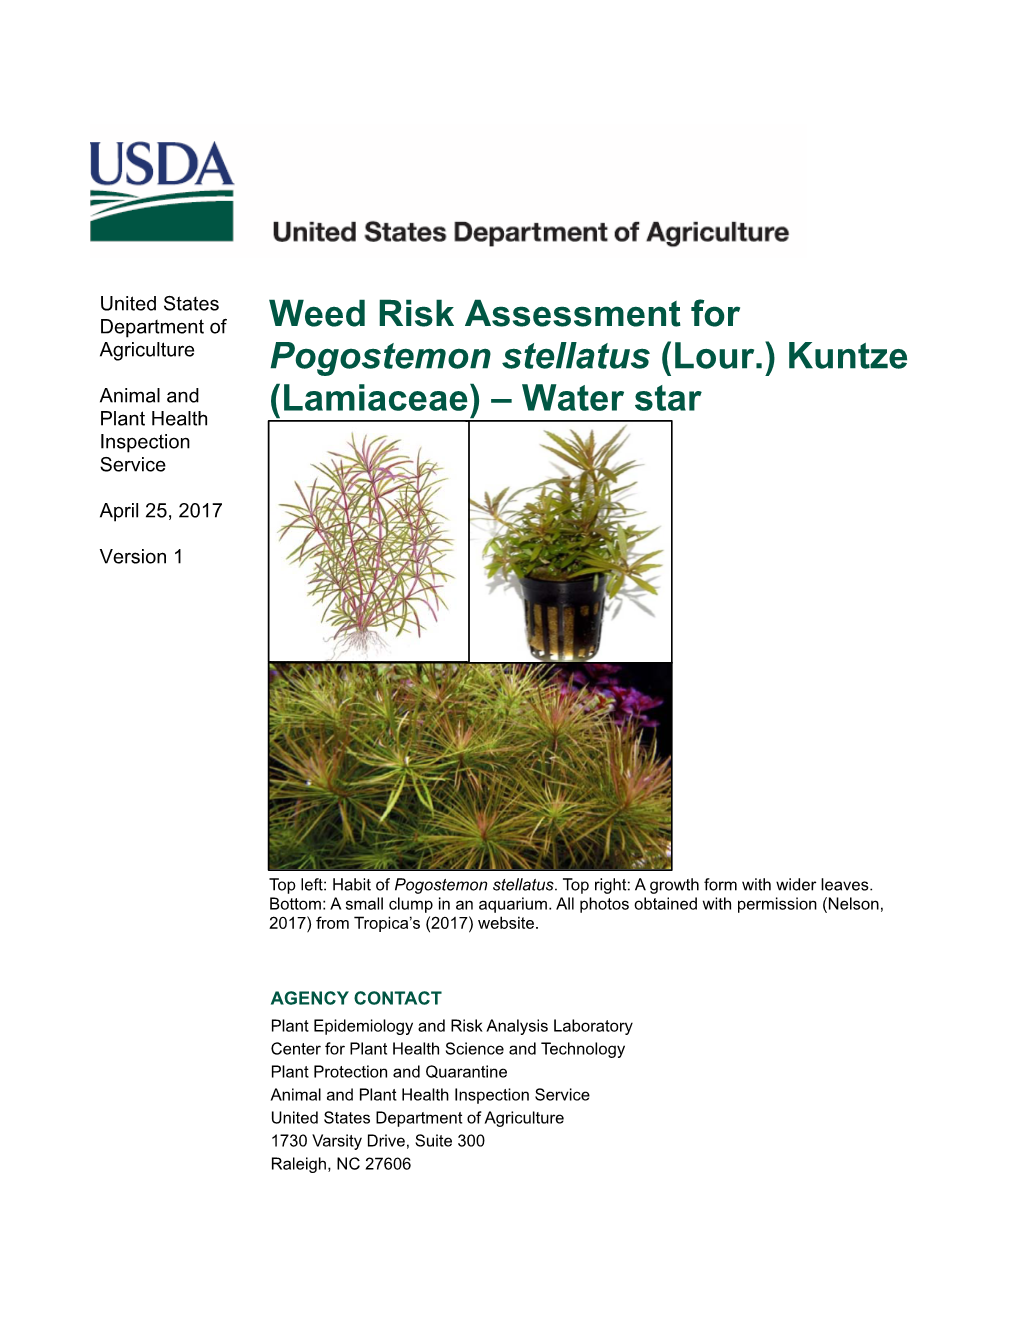 Pogostemon Stellatus (Lour.) Kuntze Animal and (Lamiaceae) – Water Star Plant Health Inspection Service